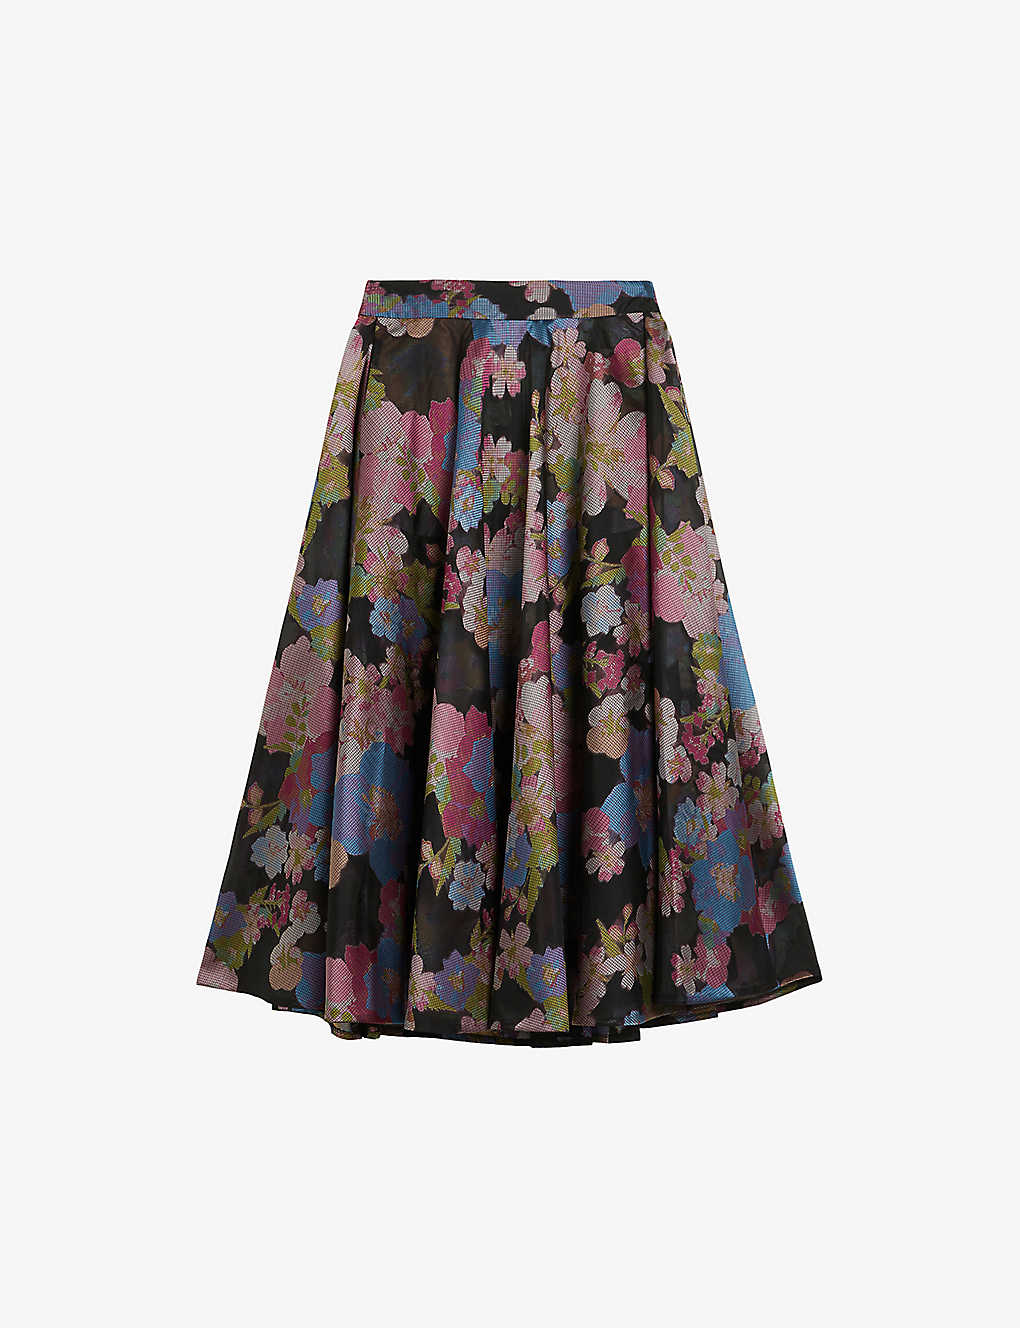 Ted Baker Womens Black Bursa Jacquard Floral-print Woven Midi Skirt